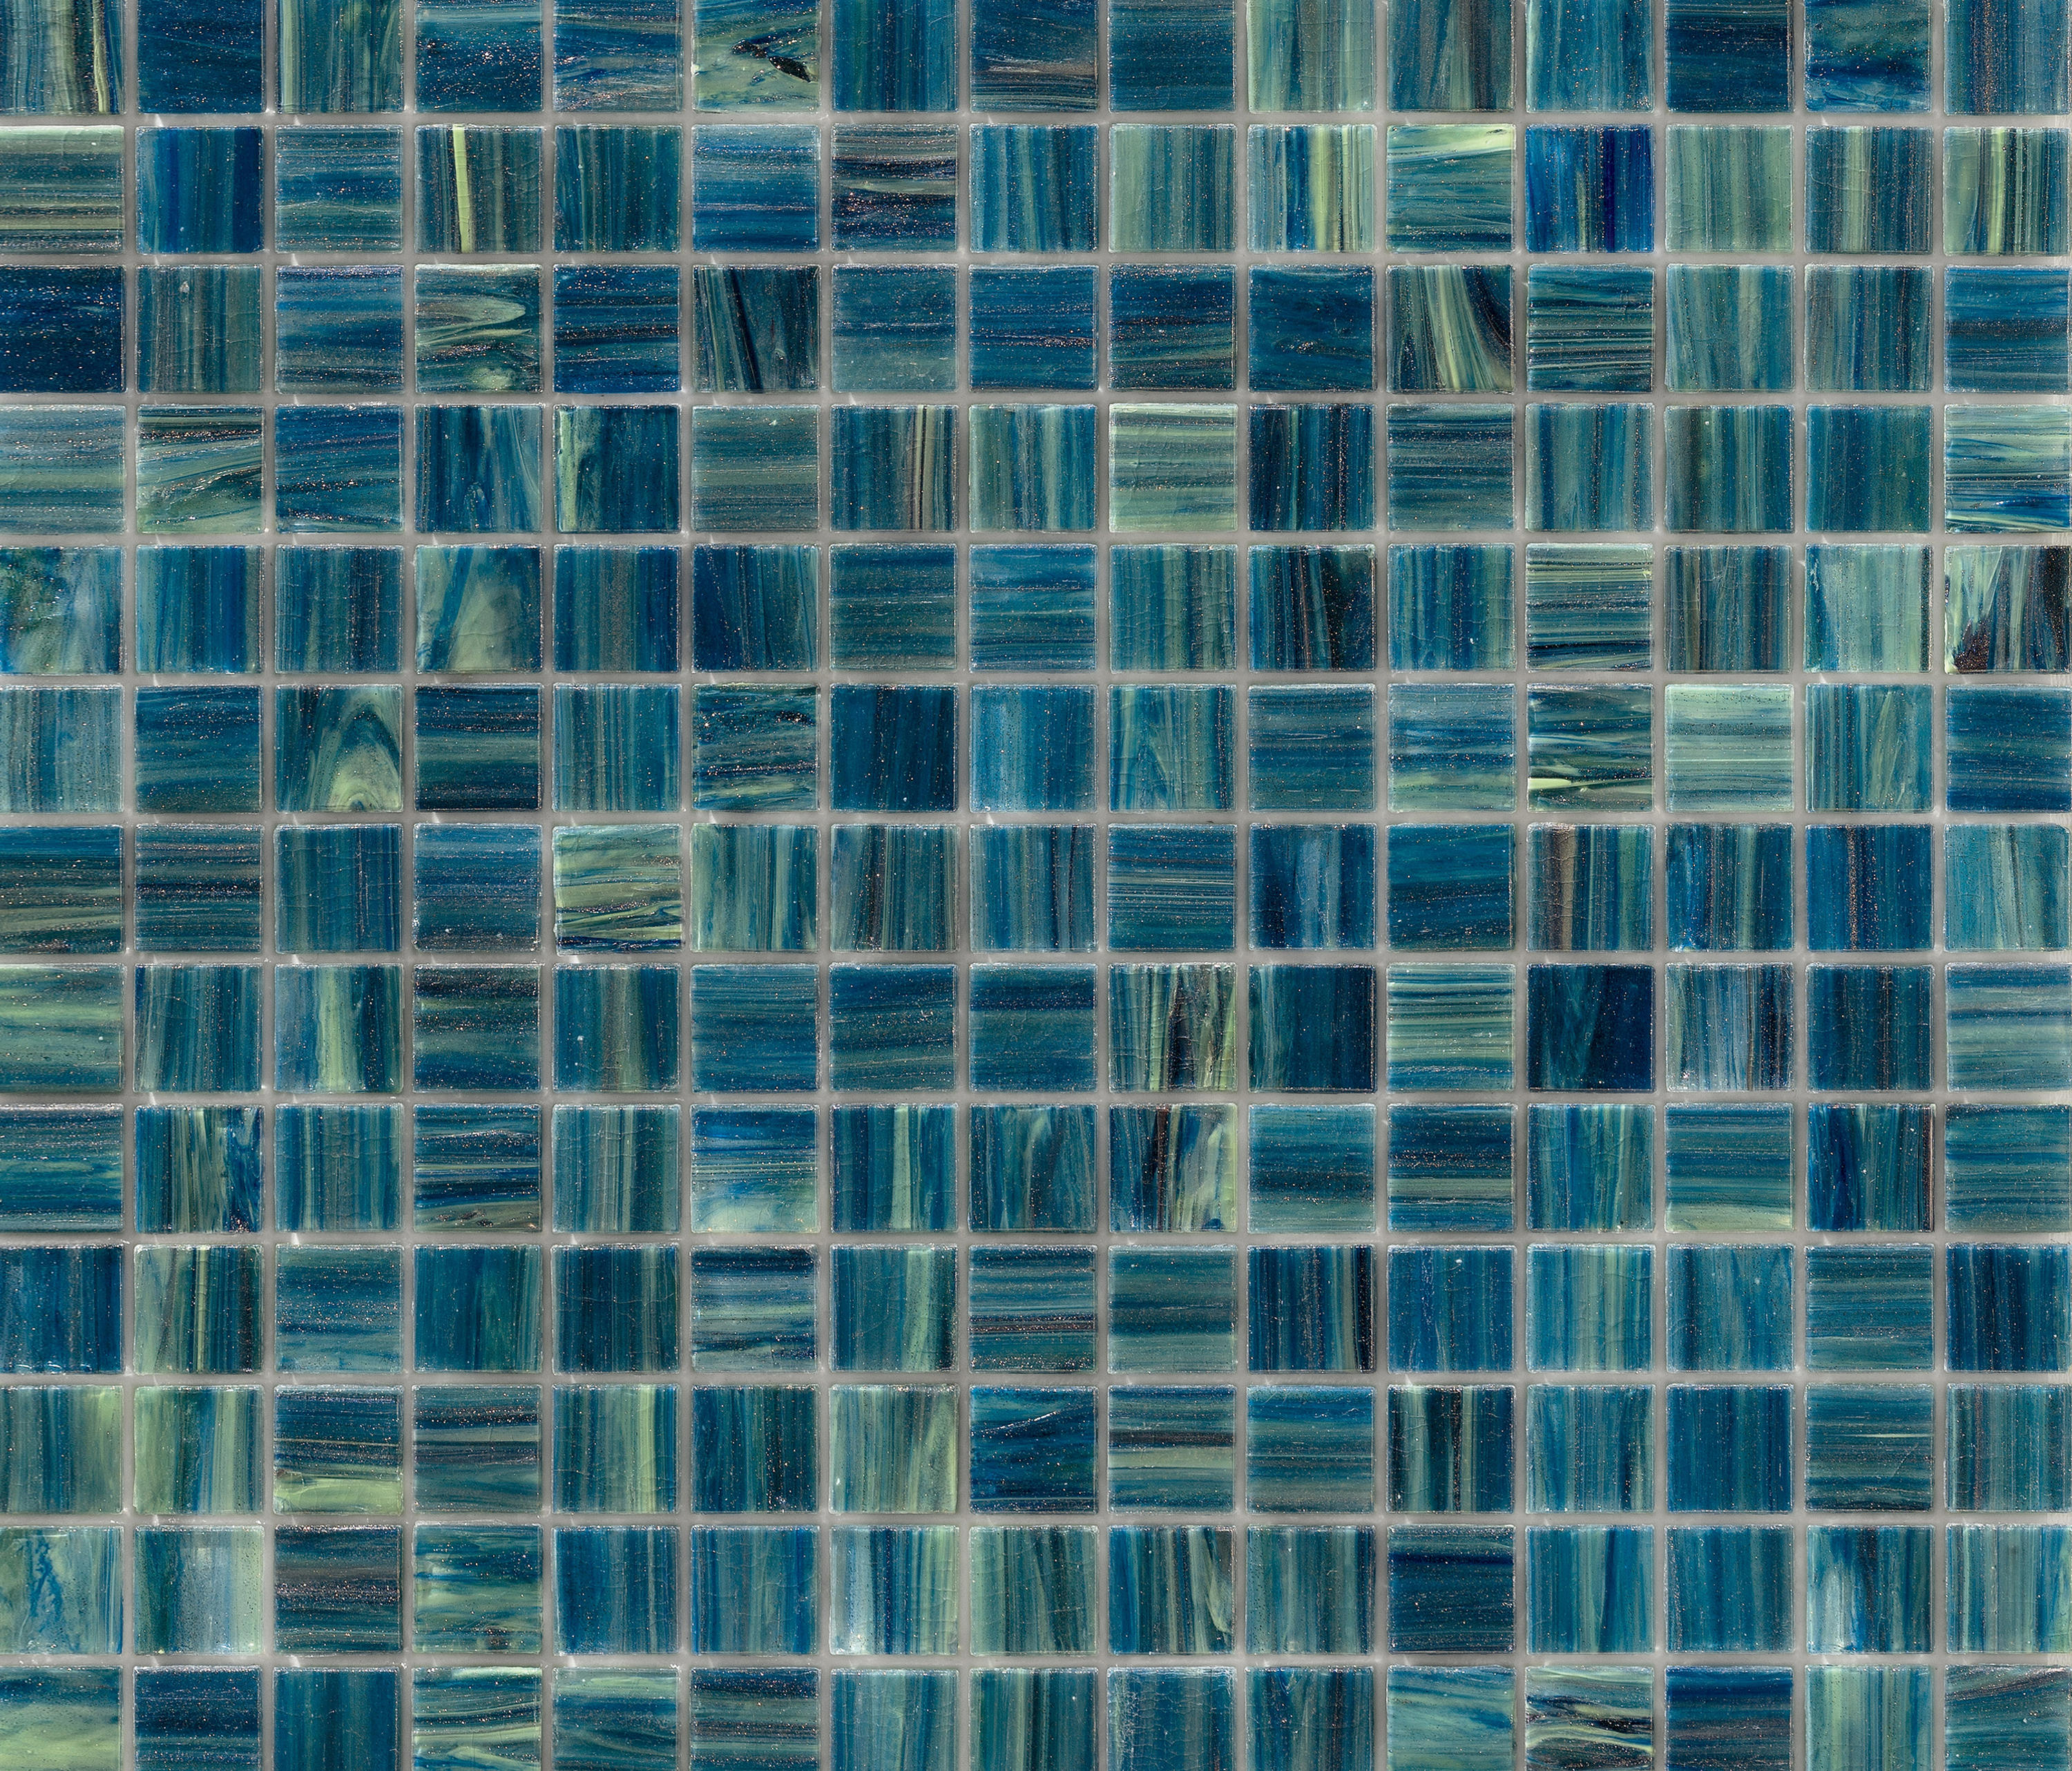 A56N-1 Ocean Glass Mosaic Tiles 20x20mm, 100gm pack - Perth Art Glass